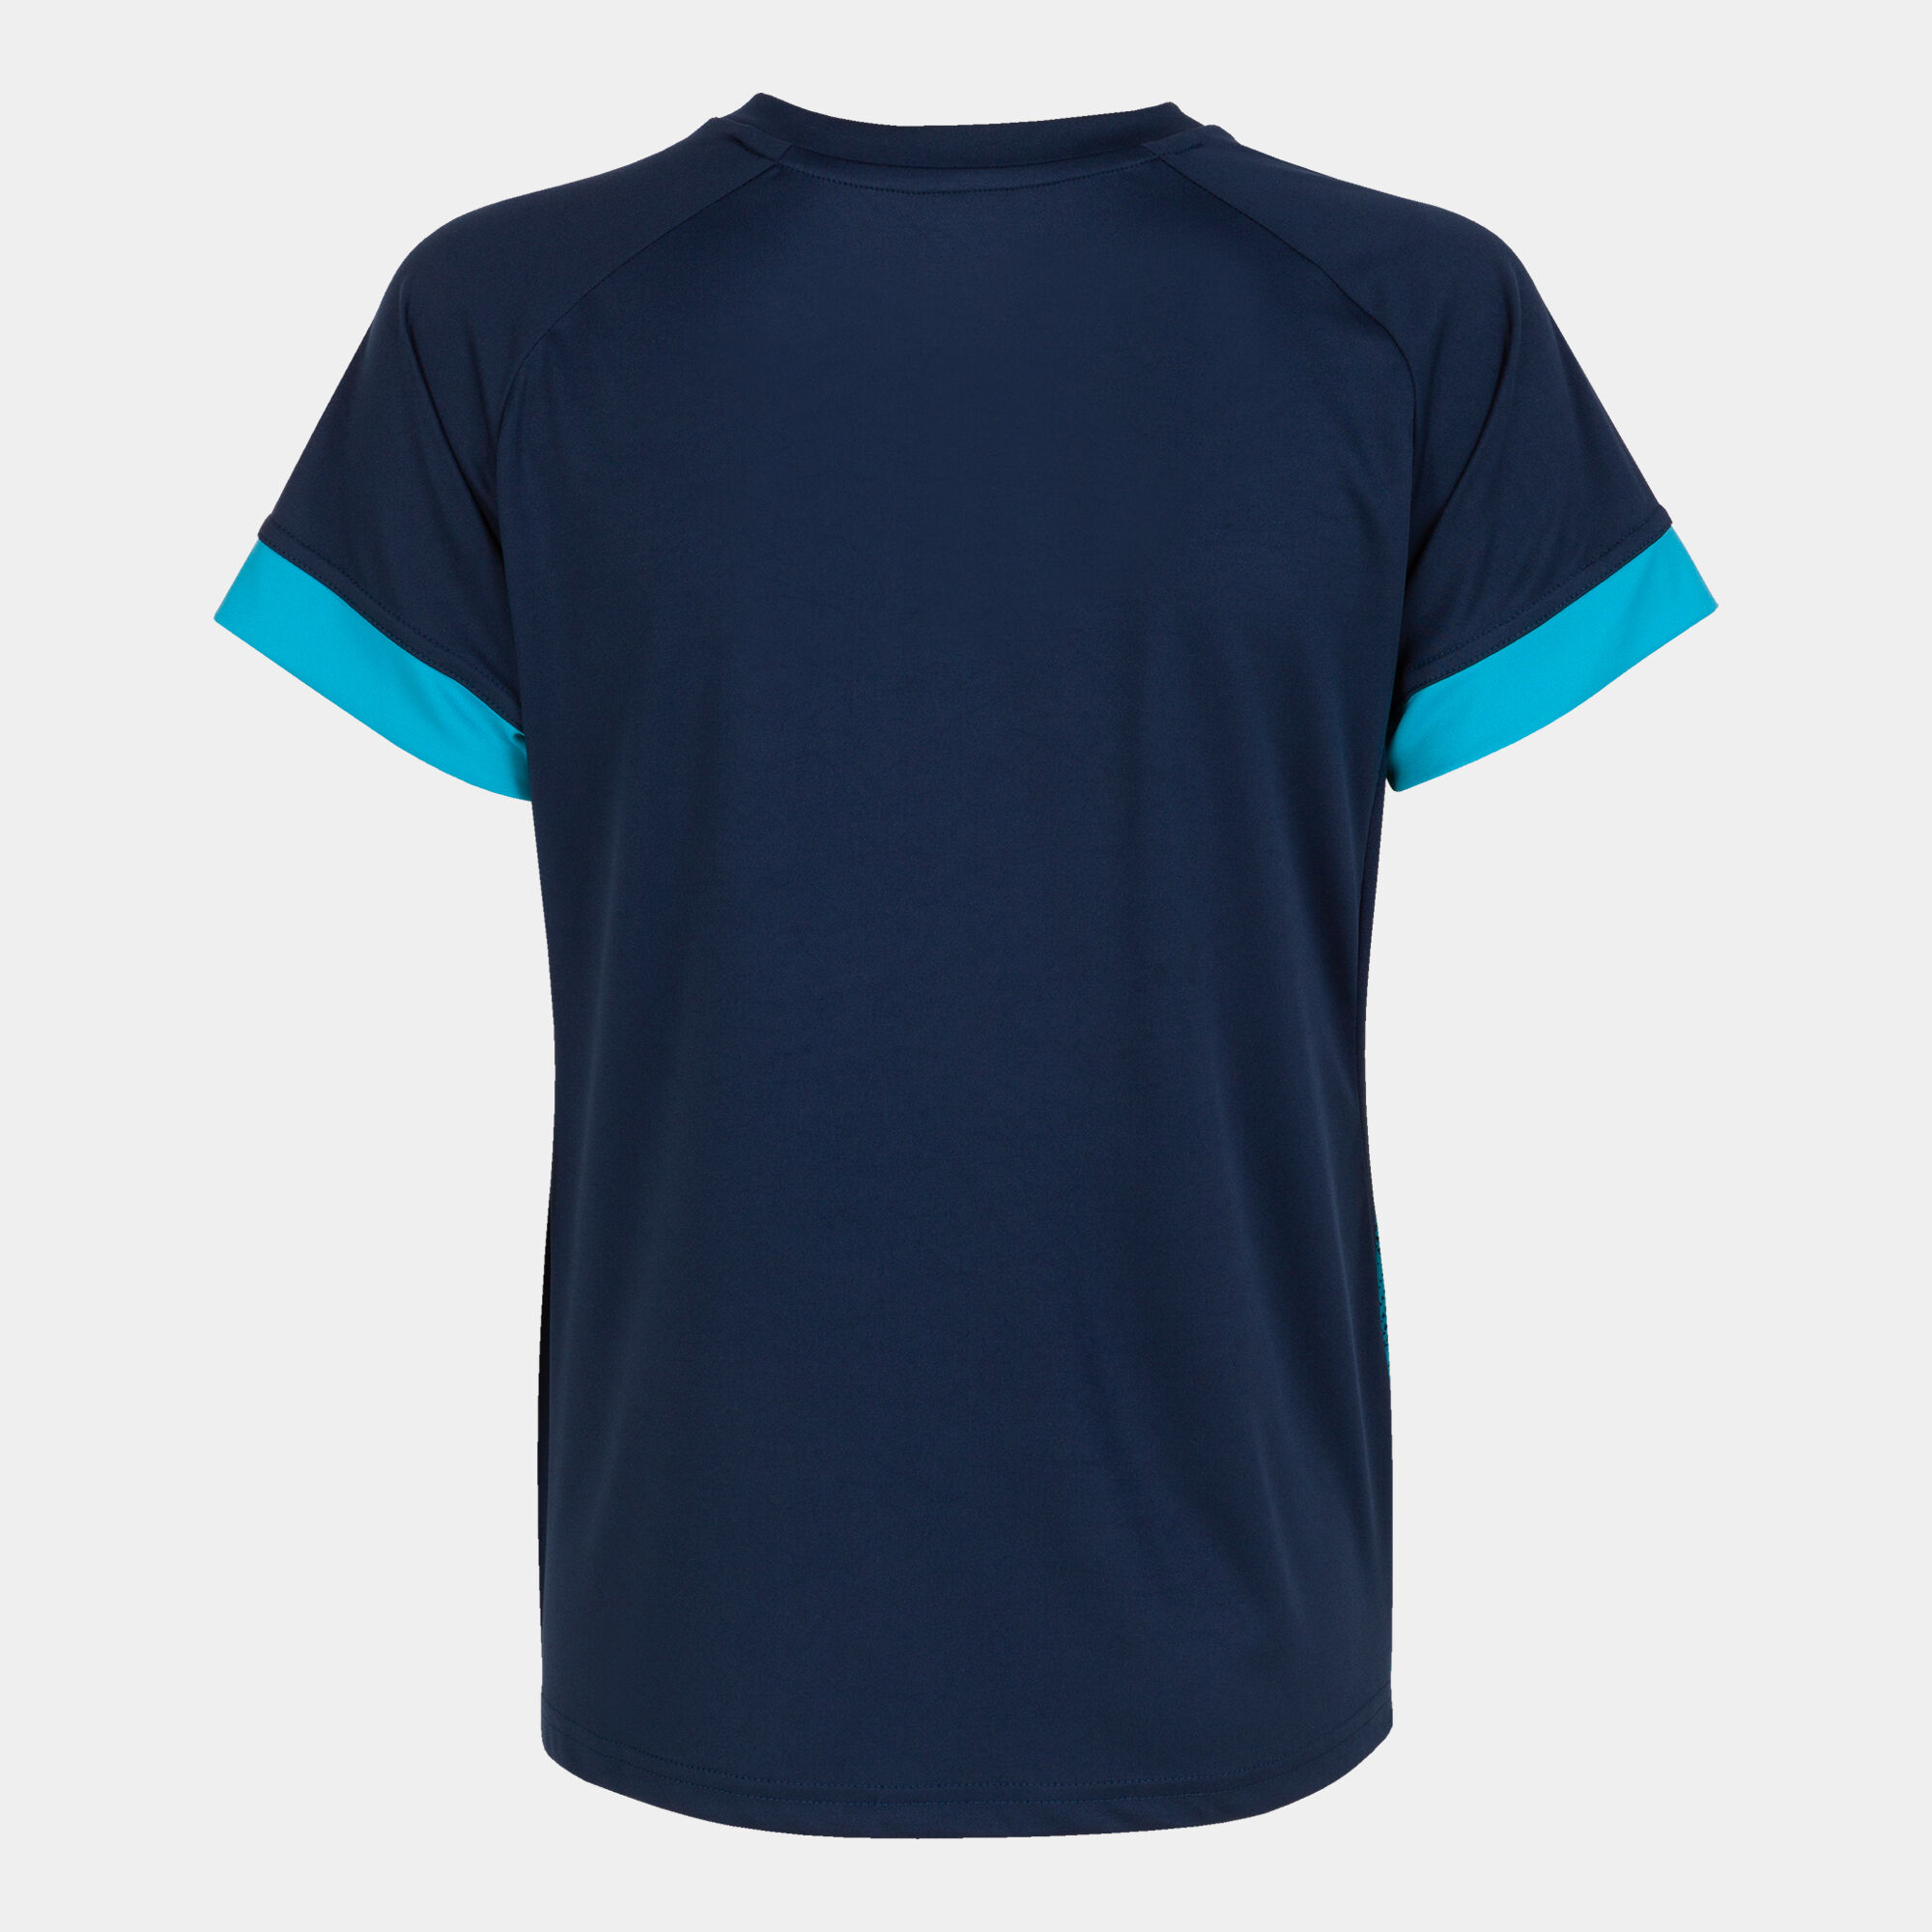 Camiseta manga corta mujer Supernova III marino turquesa flúor